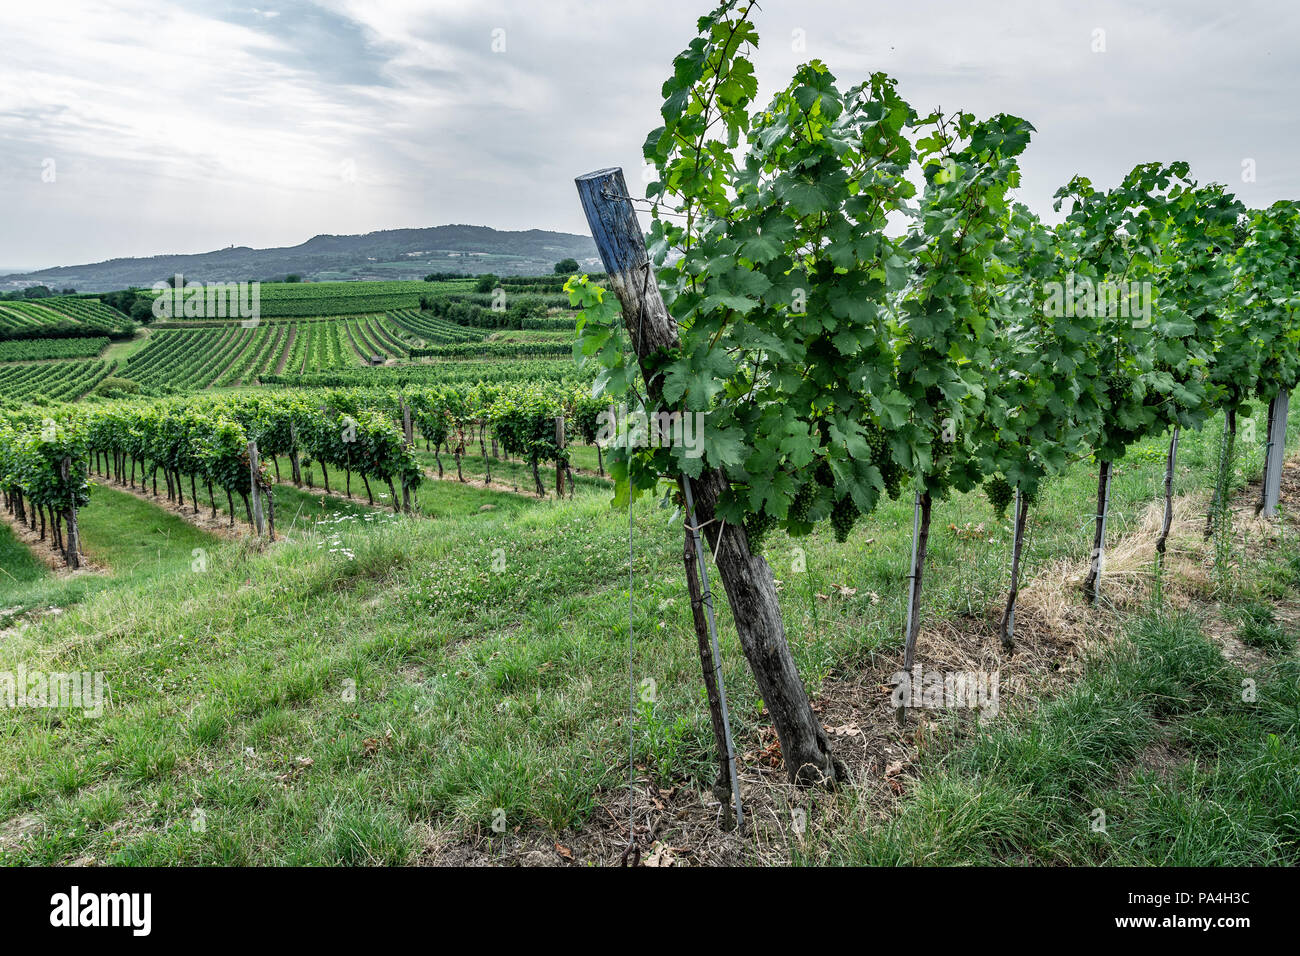 viticulture at Hollenburg, Kremstal, Lower Austria, Austria Stock Photo